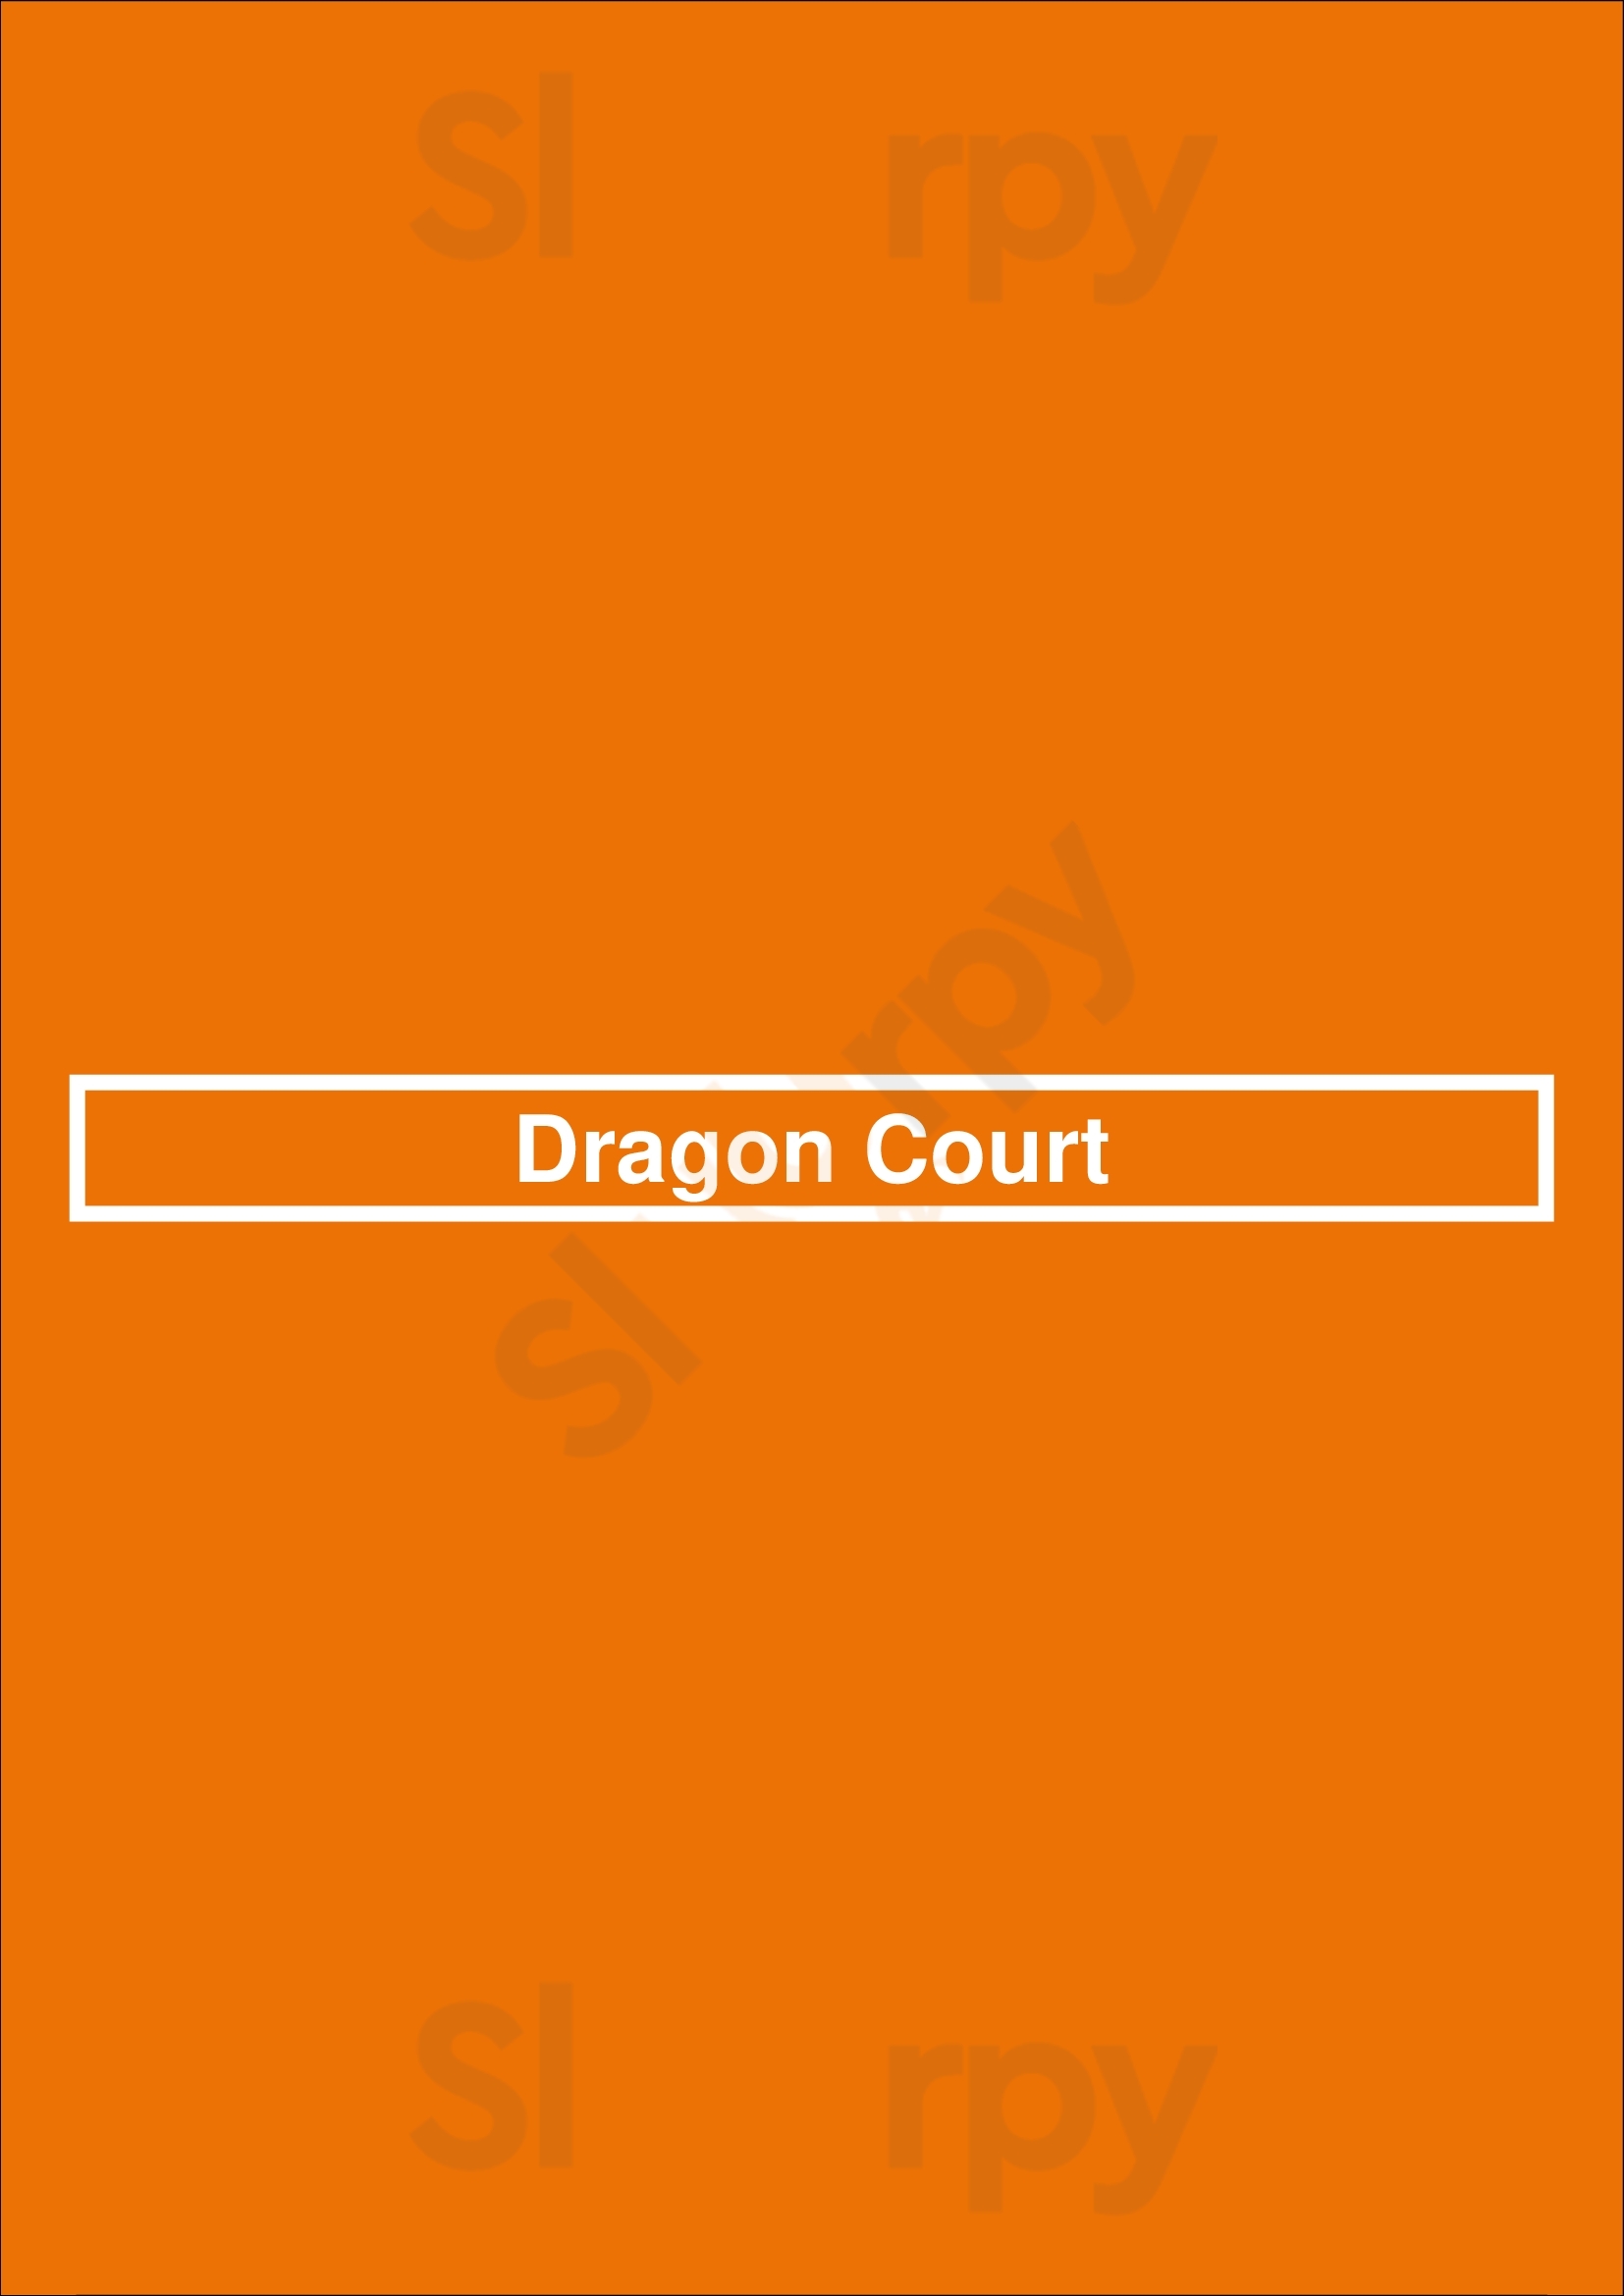 Dragon Court Hamilton Menu - 1